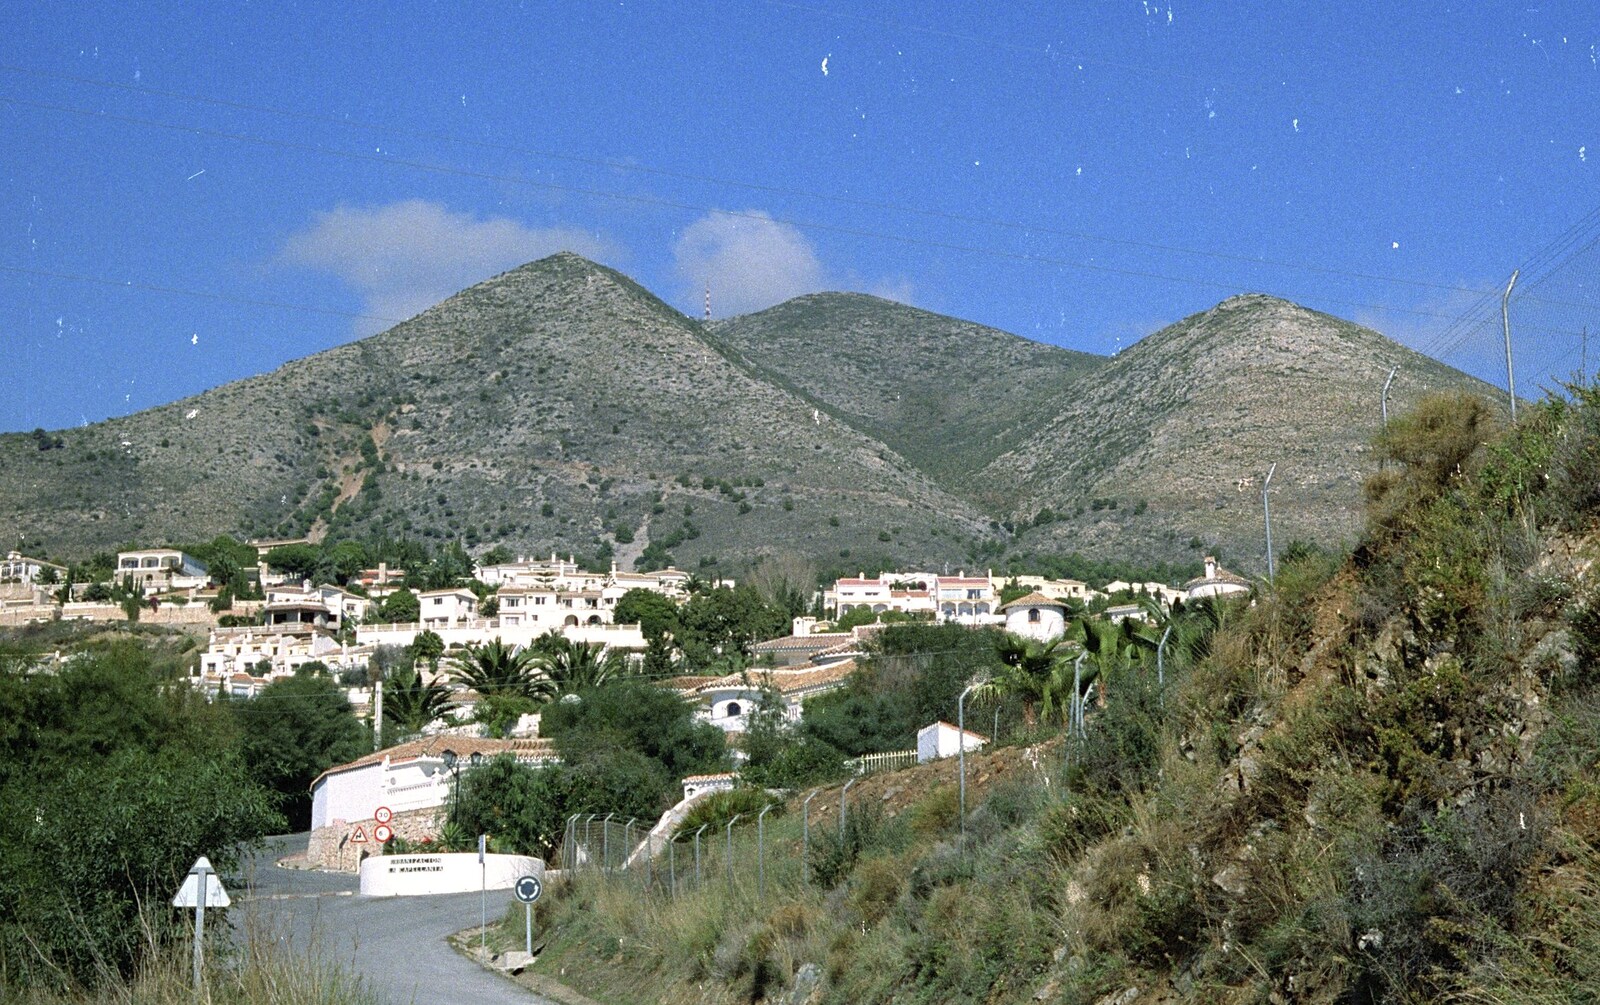 Cone-shaped hills from The CISU Massive do Malaga, Spain - November 14th 1998